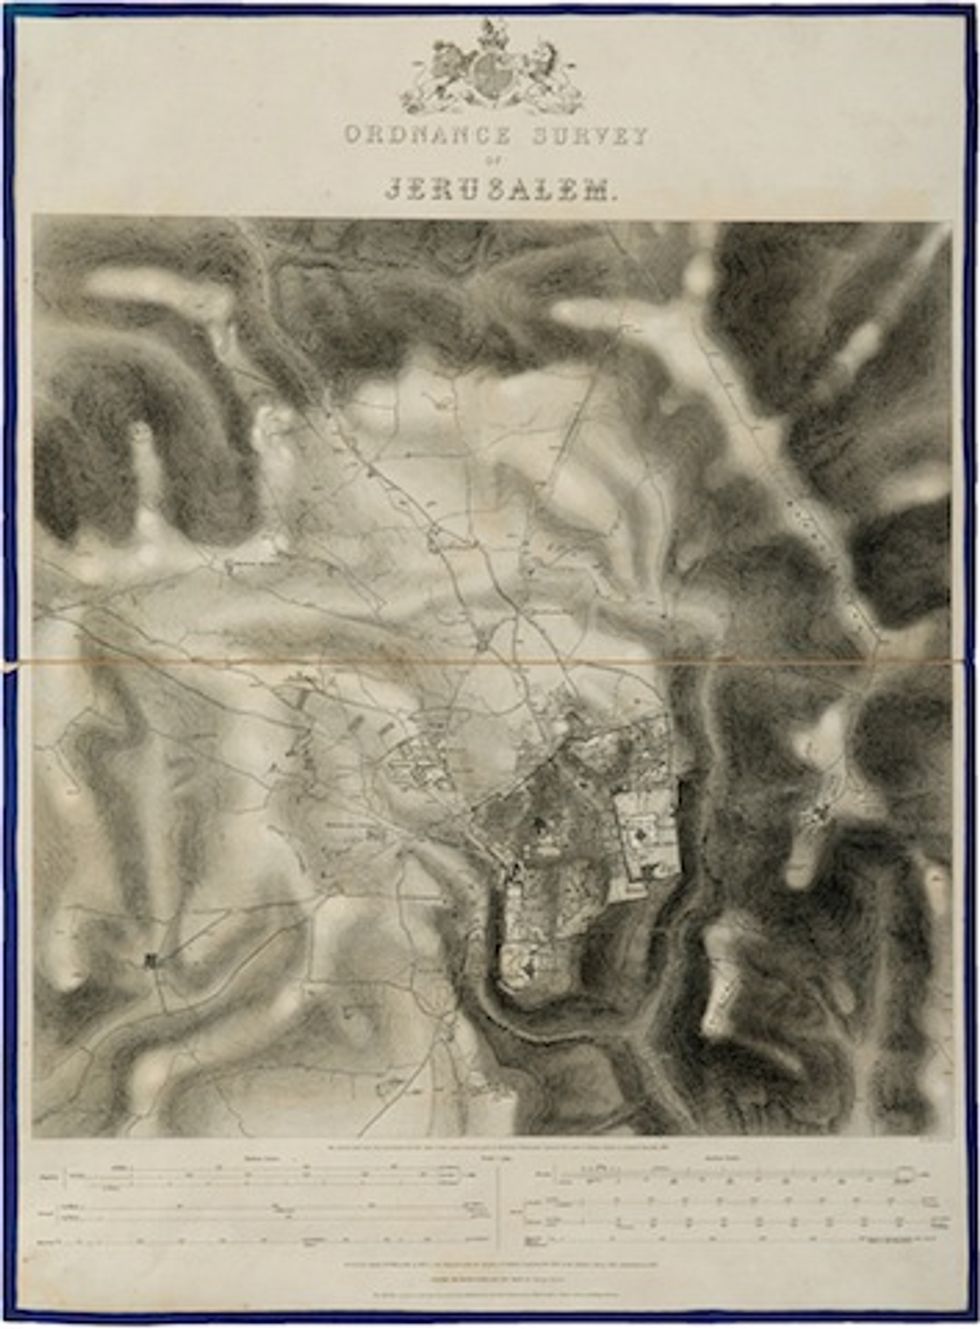 Nineteenth Century Jerusalem Maps Shed Light on the Holy City Once 'Shrouded in Mystery